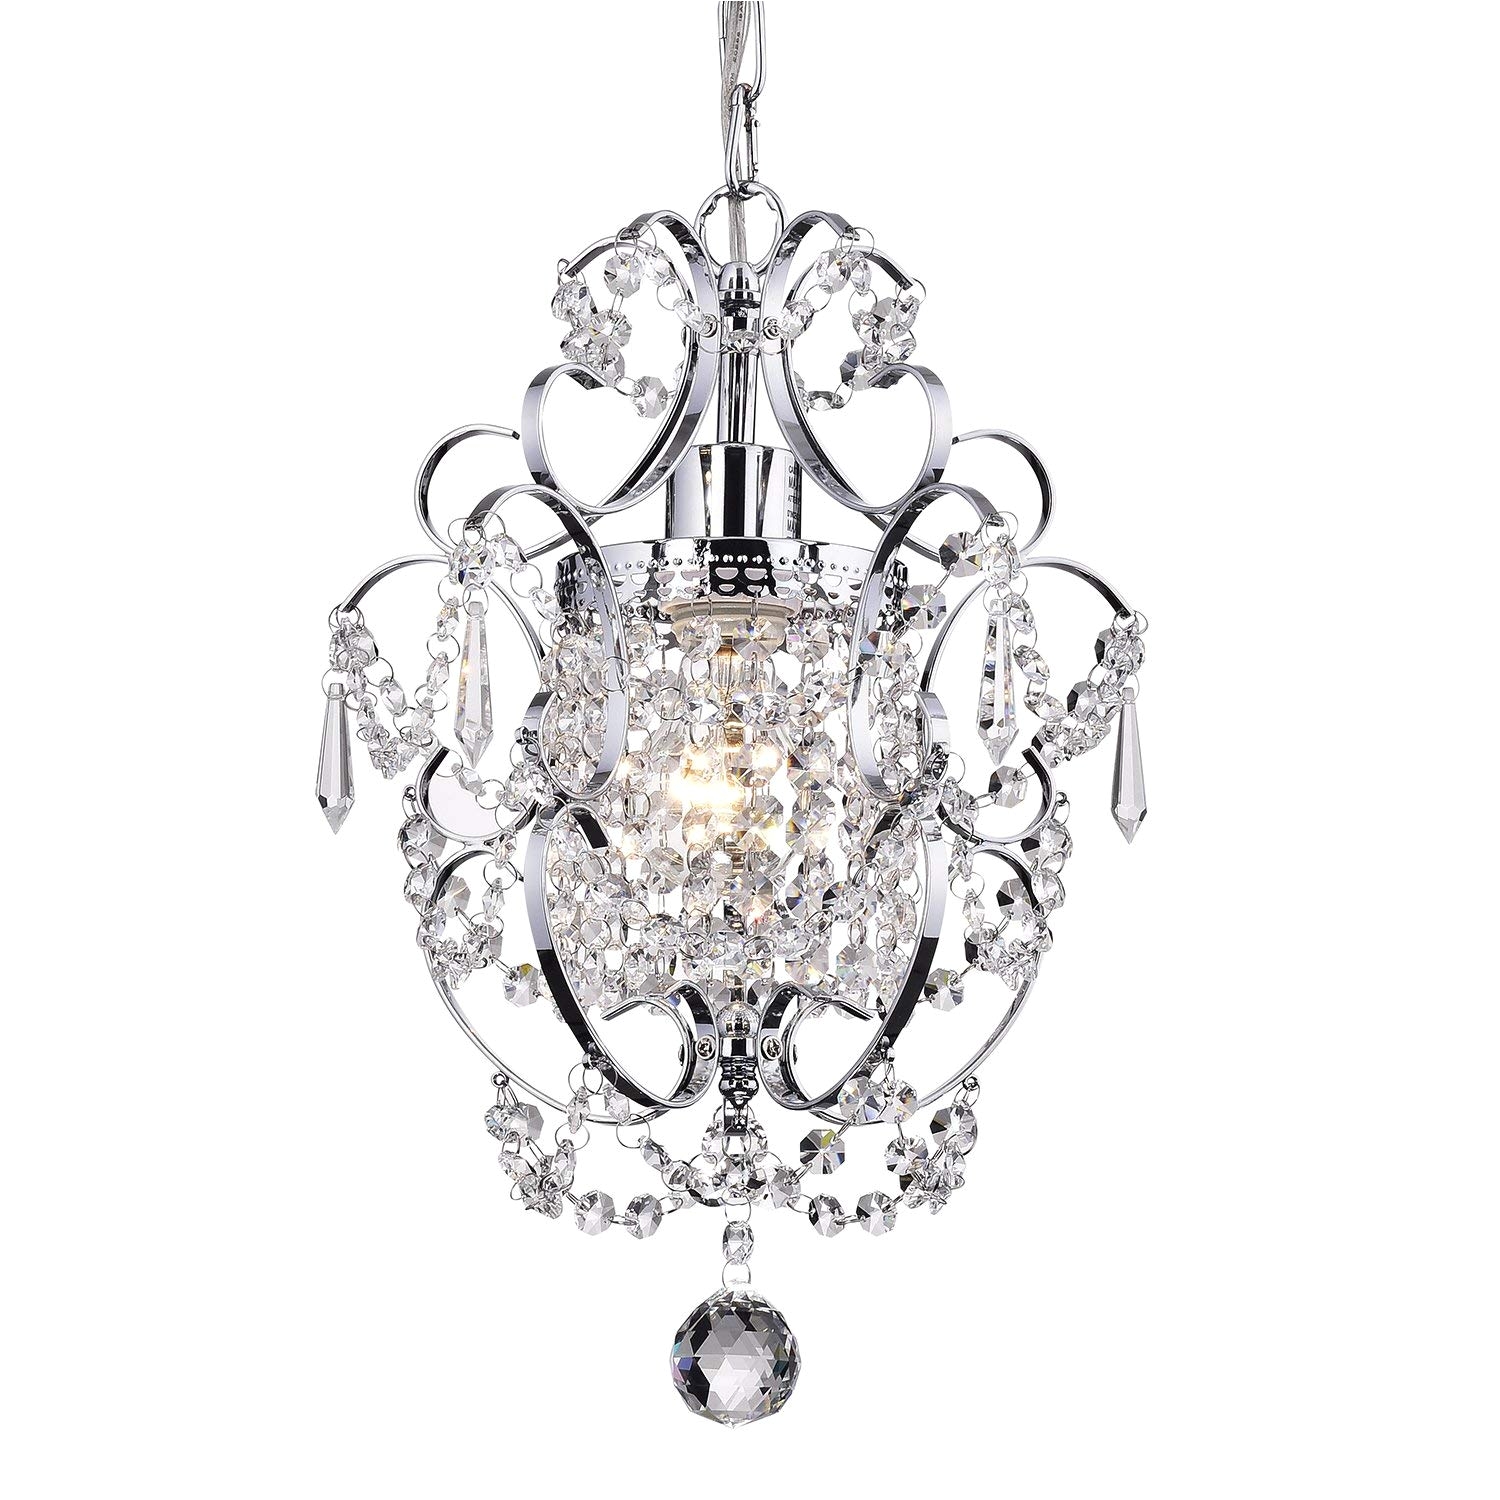 amorette chrome finish mini chandelier wrought iron ceiling light fixture amazon com